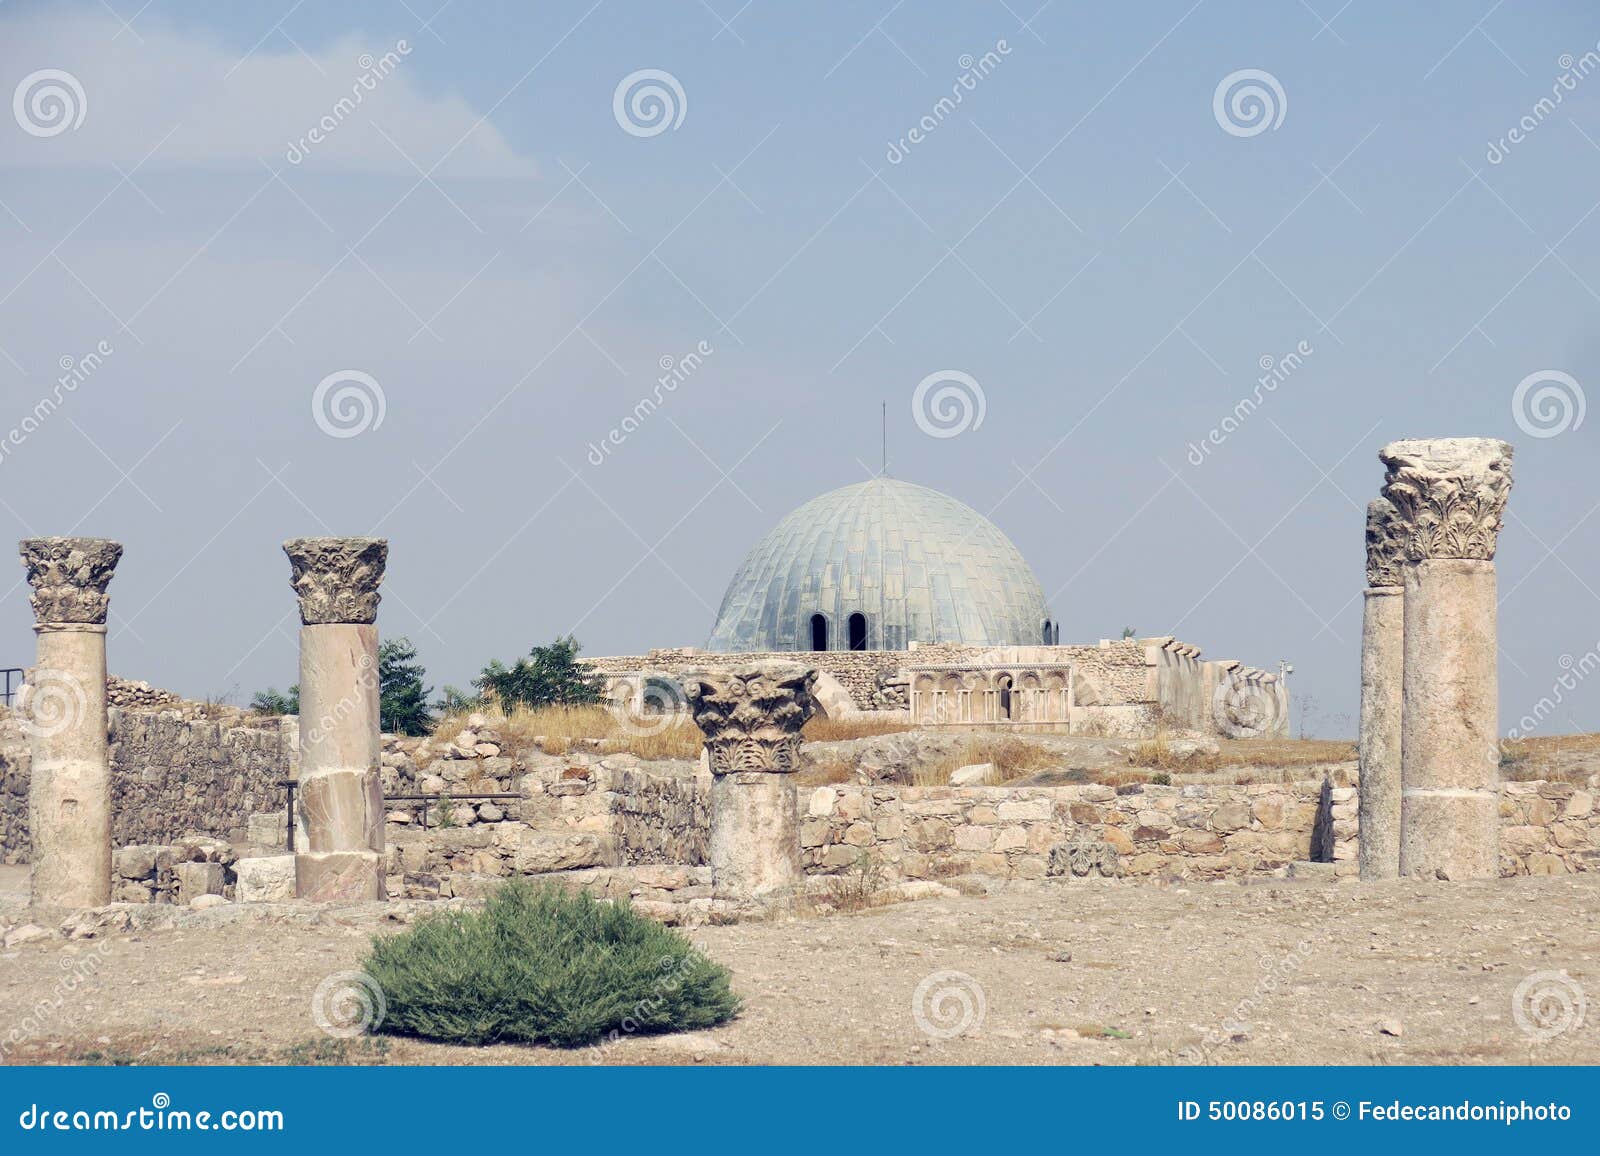 buildings of amman citadel in national historic site